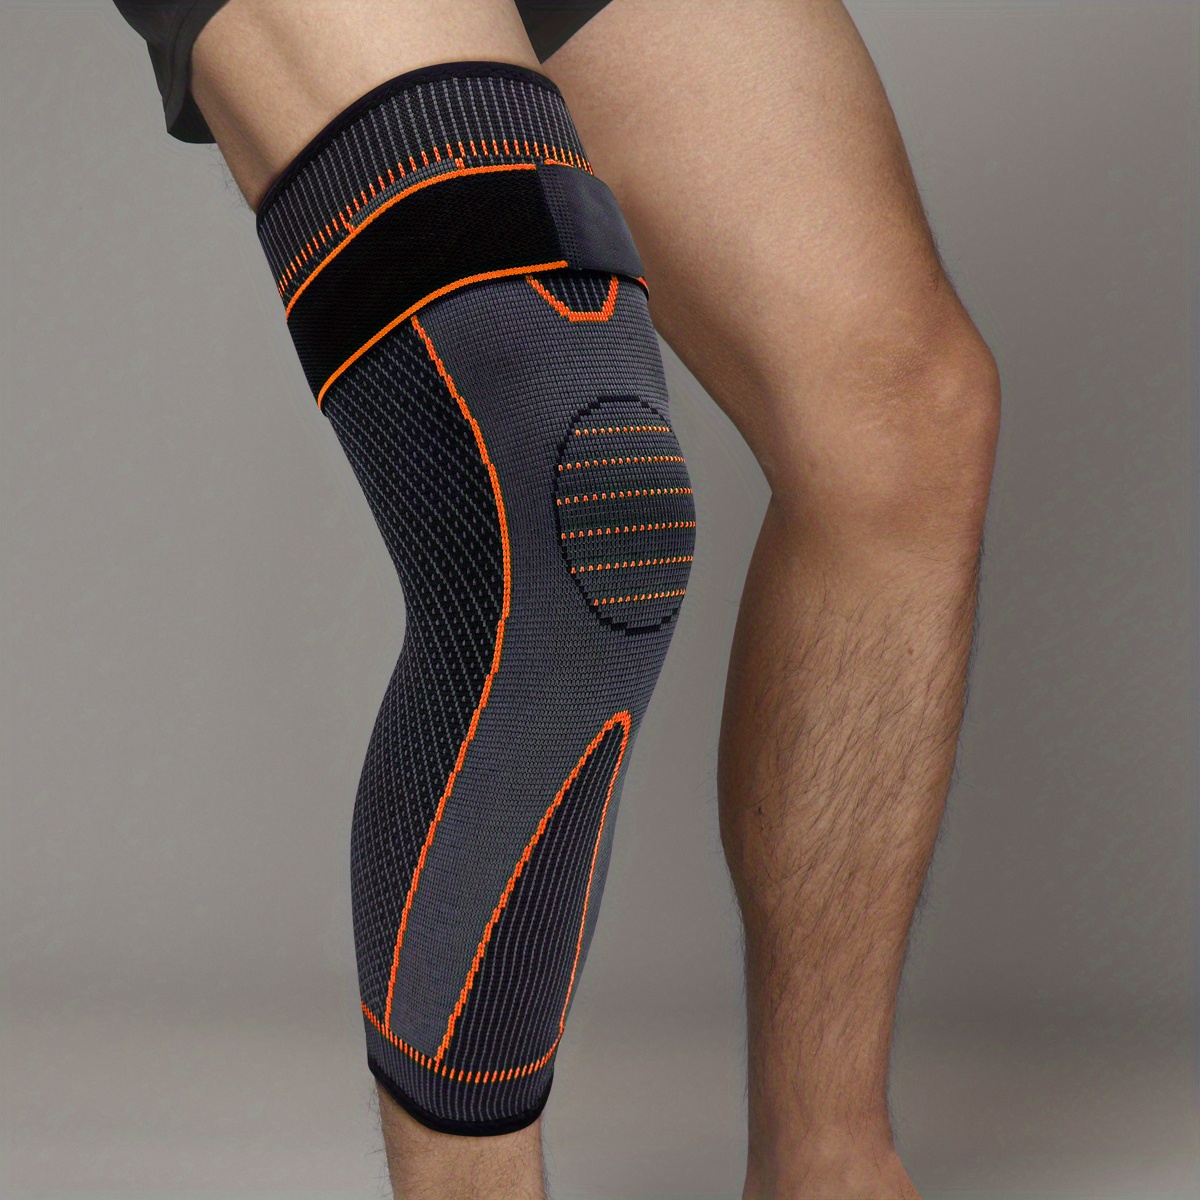 1 Pair Full Leg Compression Sleeves for Women & Men,Extra Long Leg & Calf Braces Knee Sleeve for Basketball, Football, Running, Working Out, Arthritis